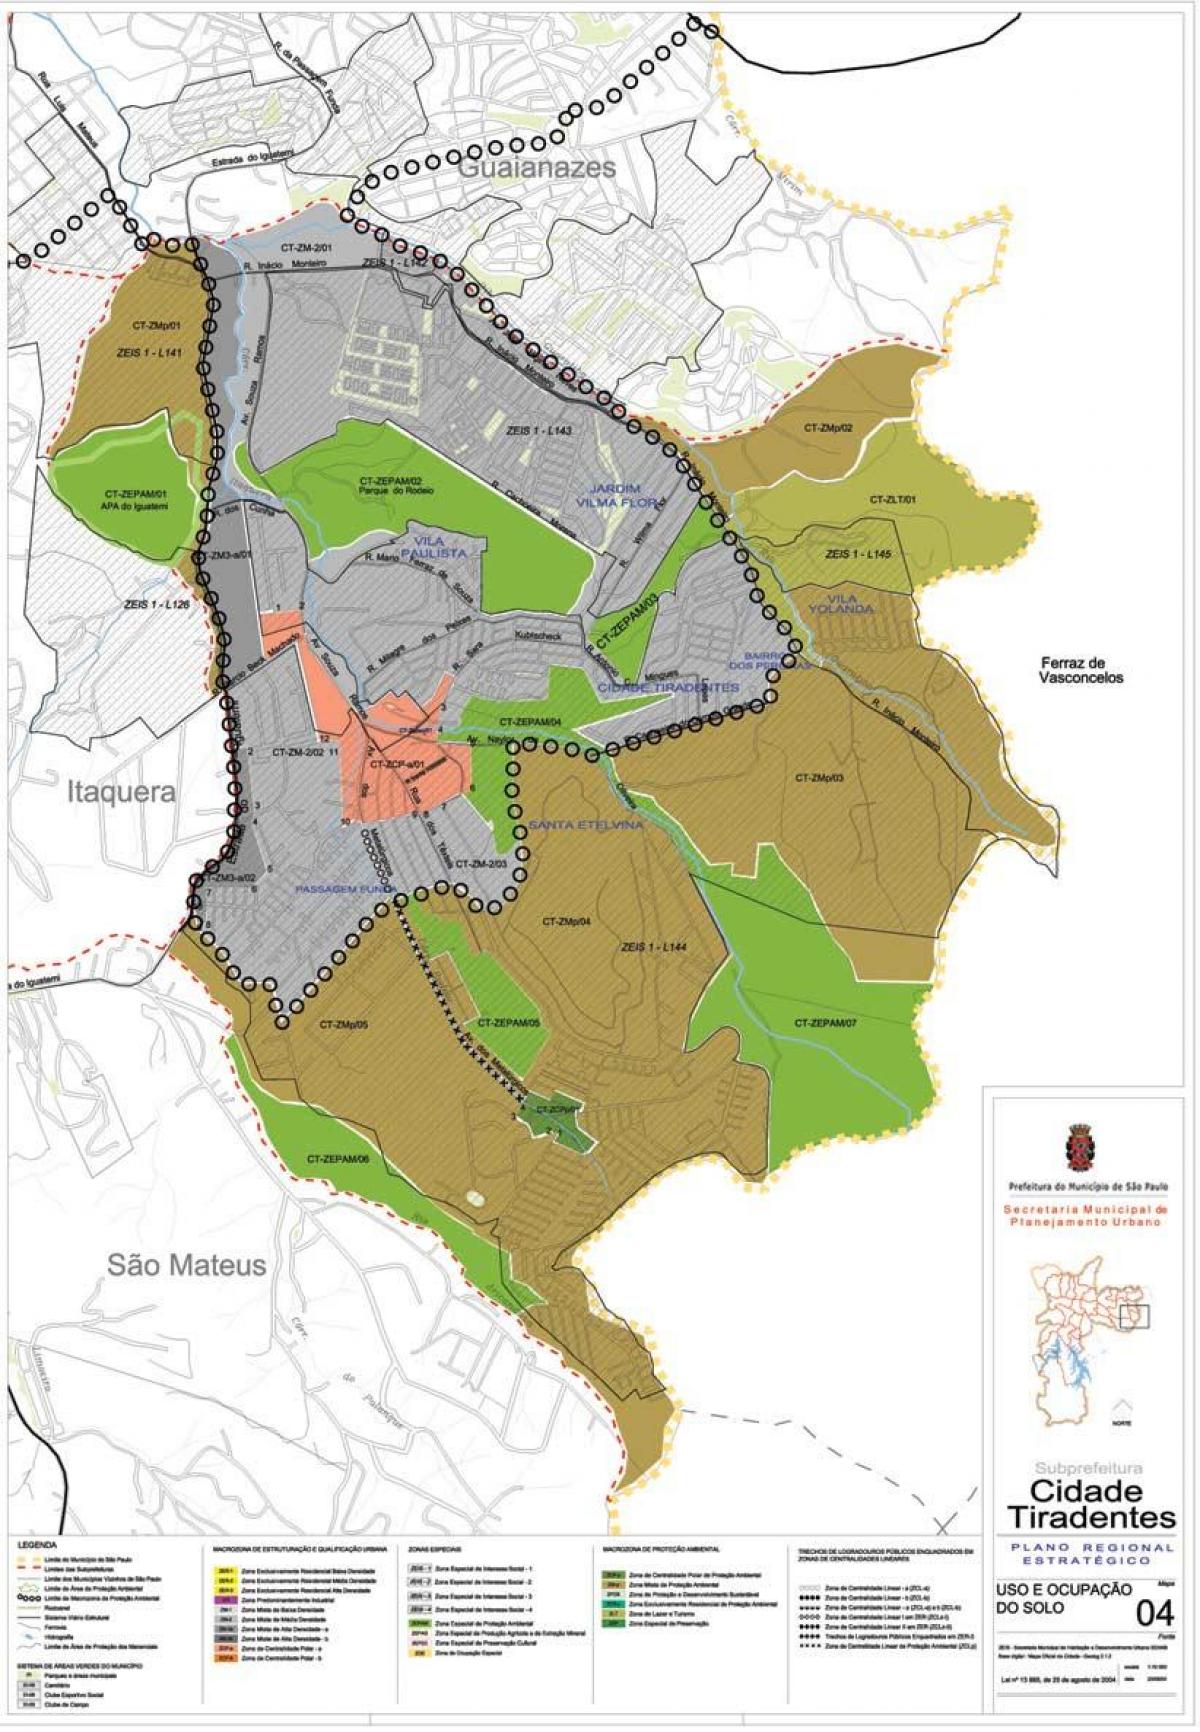 नक्शे के सिडेड तिरदेन्टेस साओ पाउलो - व्यवसाय की मिट्टी